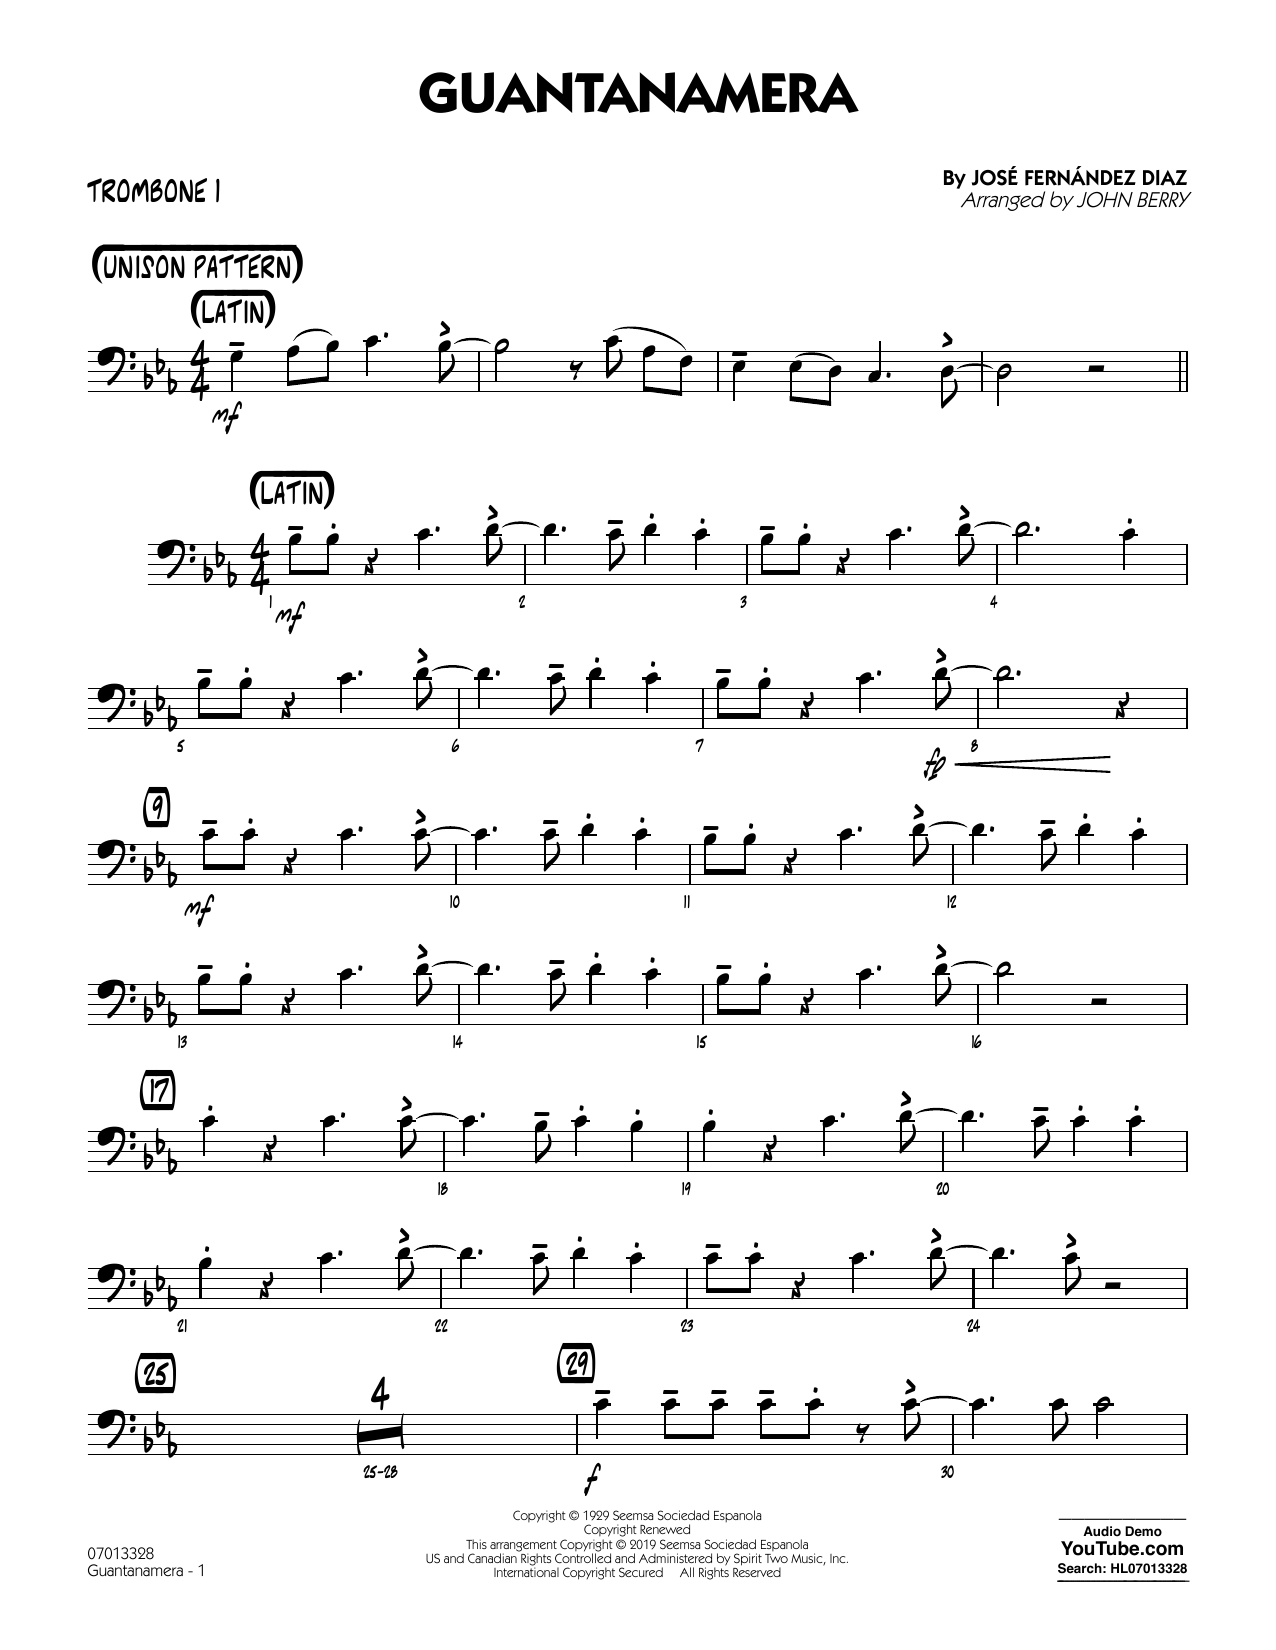 José Fernández Diaz Guantanamera (arr. John Berry) - Trombone 1 Sheet Music Notes & Chords for Jazz Ensemble - Download or Print PDF